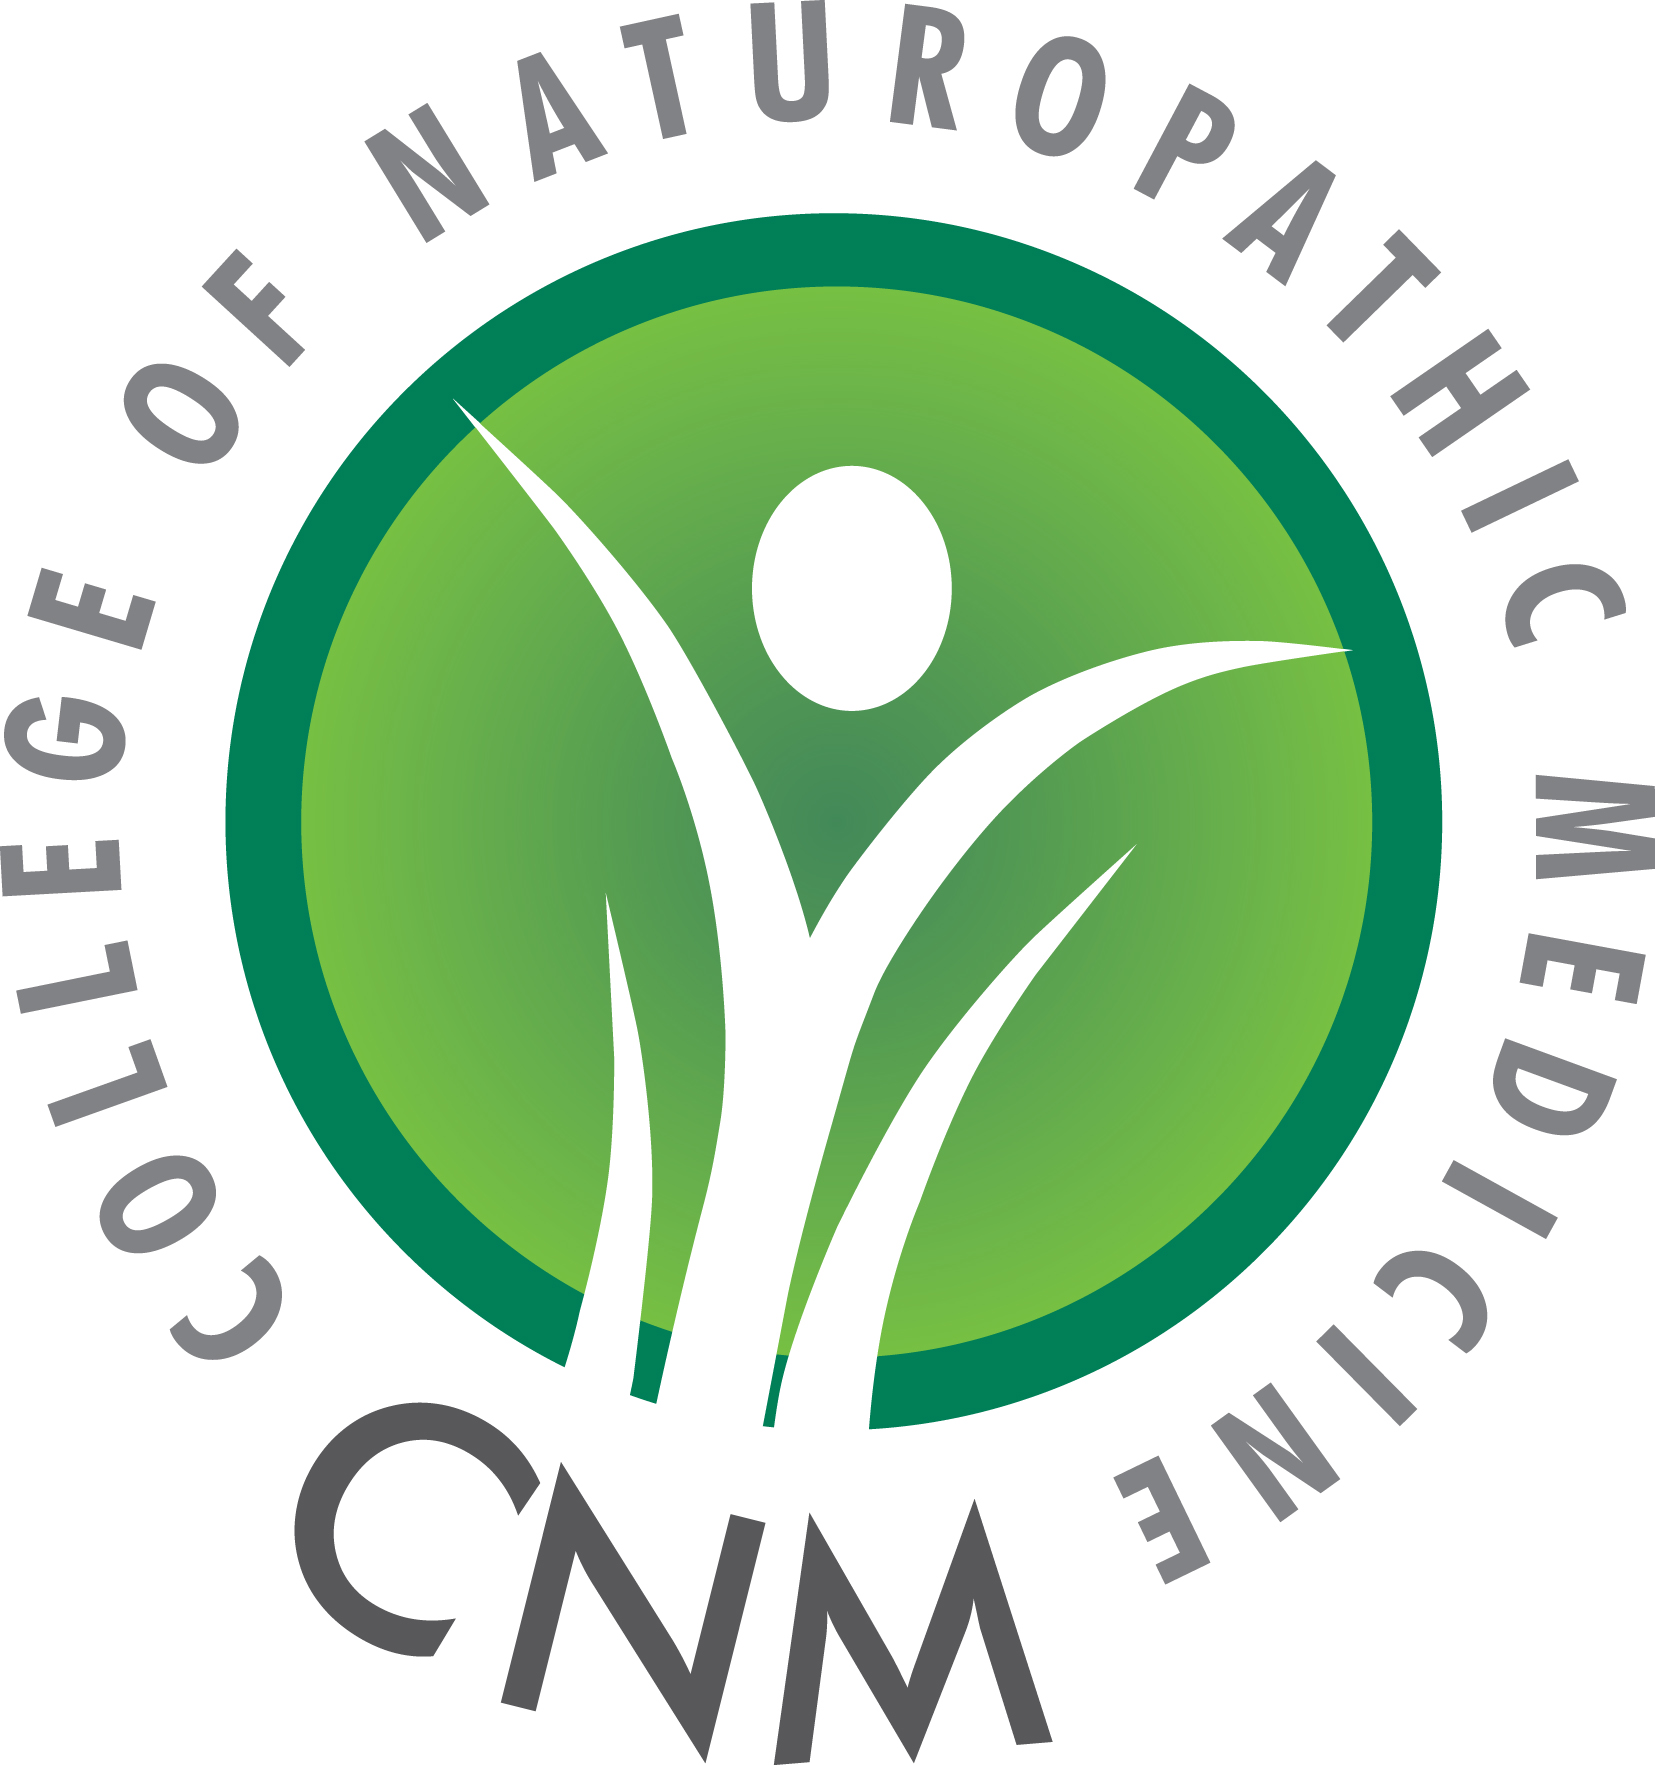 College of Naturopathic Medicine